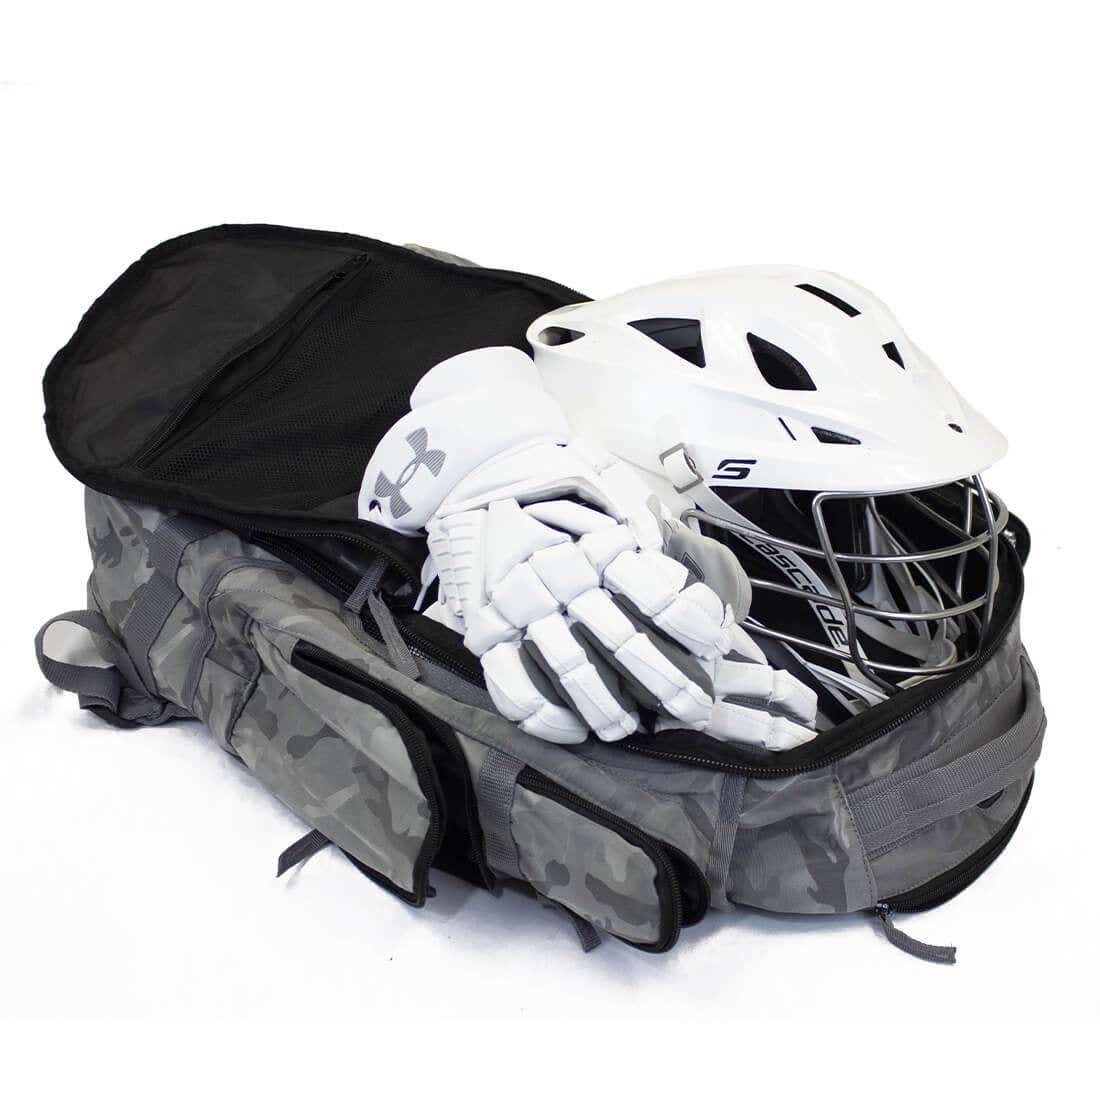 IronHorse Custom lacrosse bags